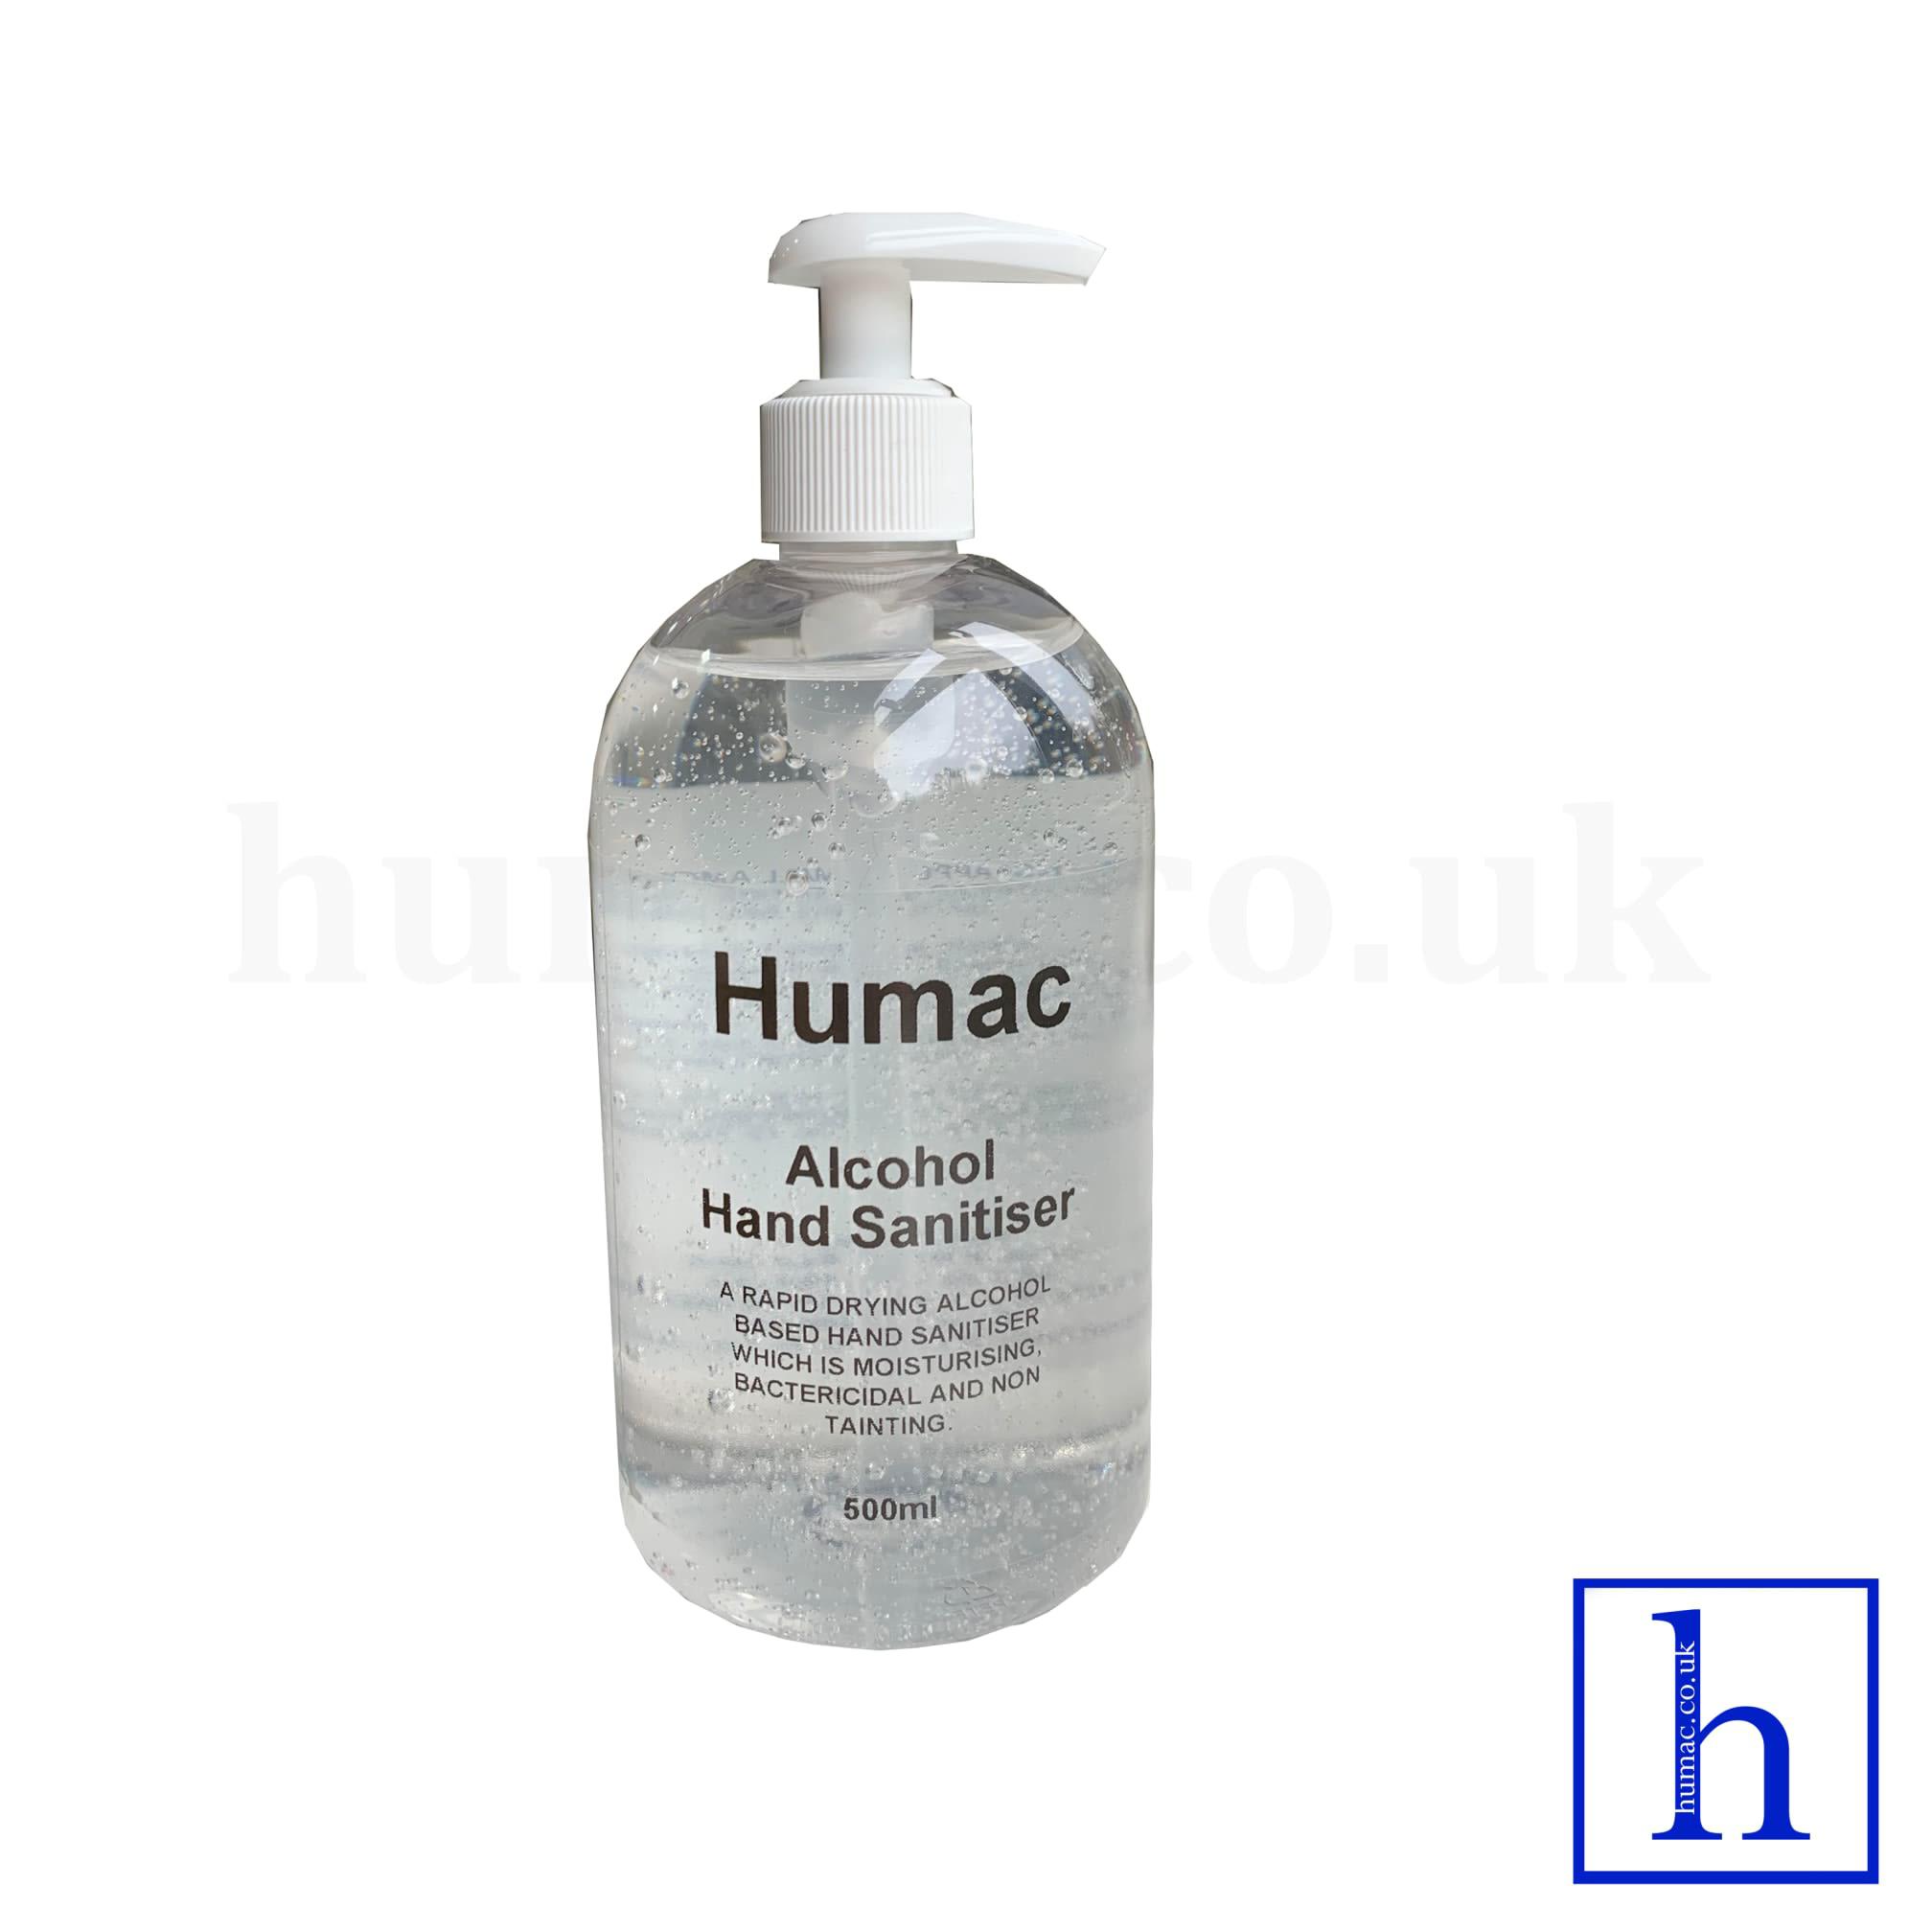 Images Humac Associates Supplies Ltd